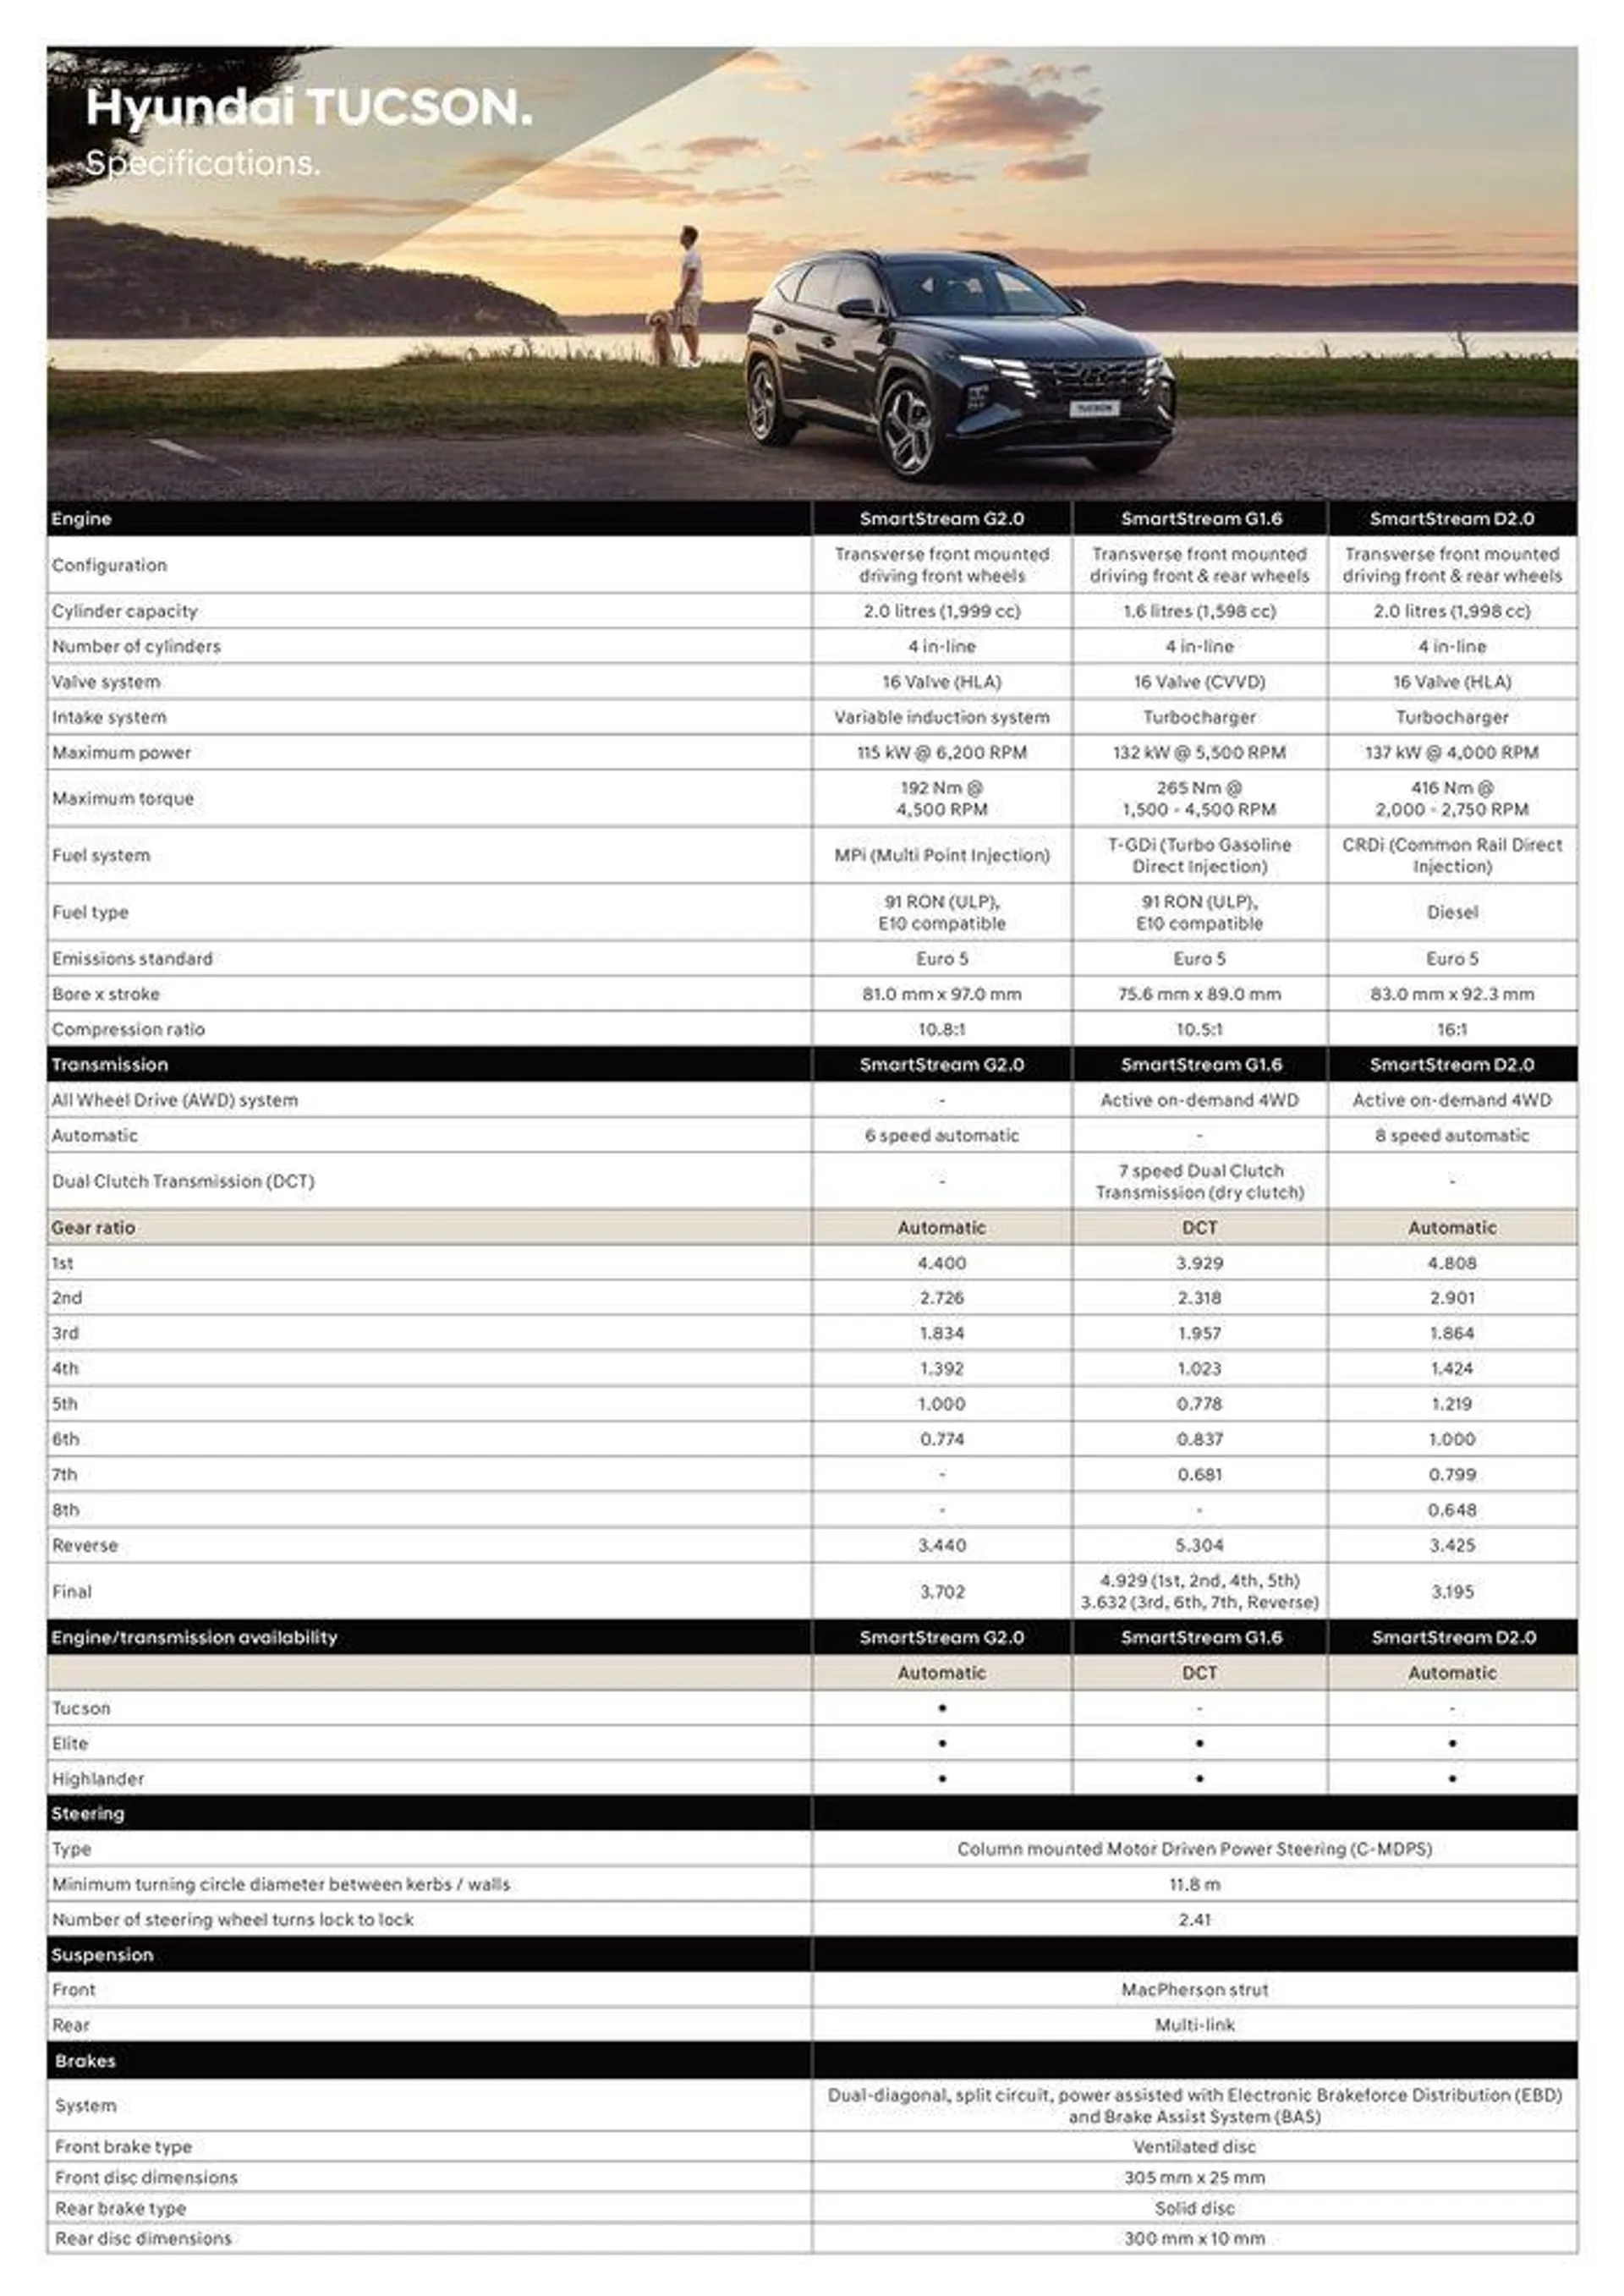 Hyundai TUCSON Specifications Sheet - 1